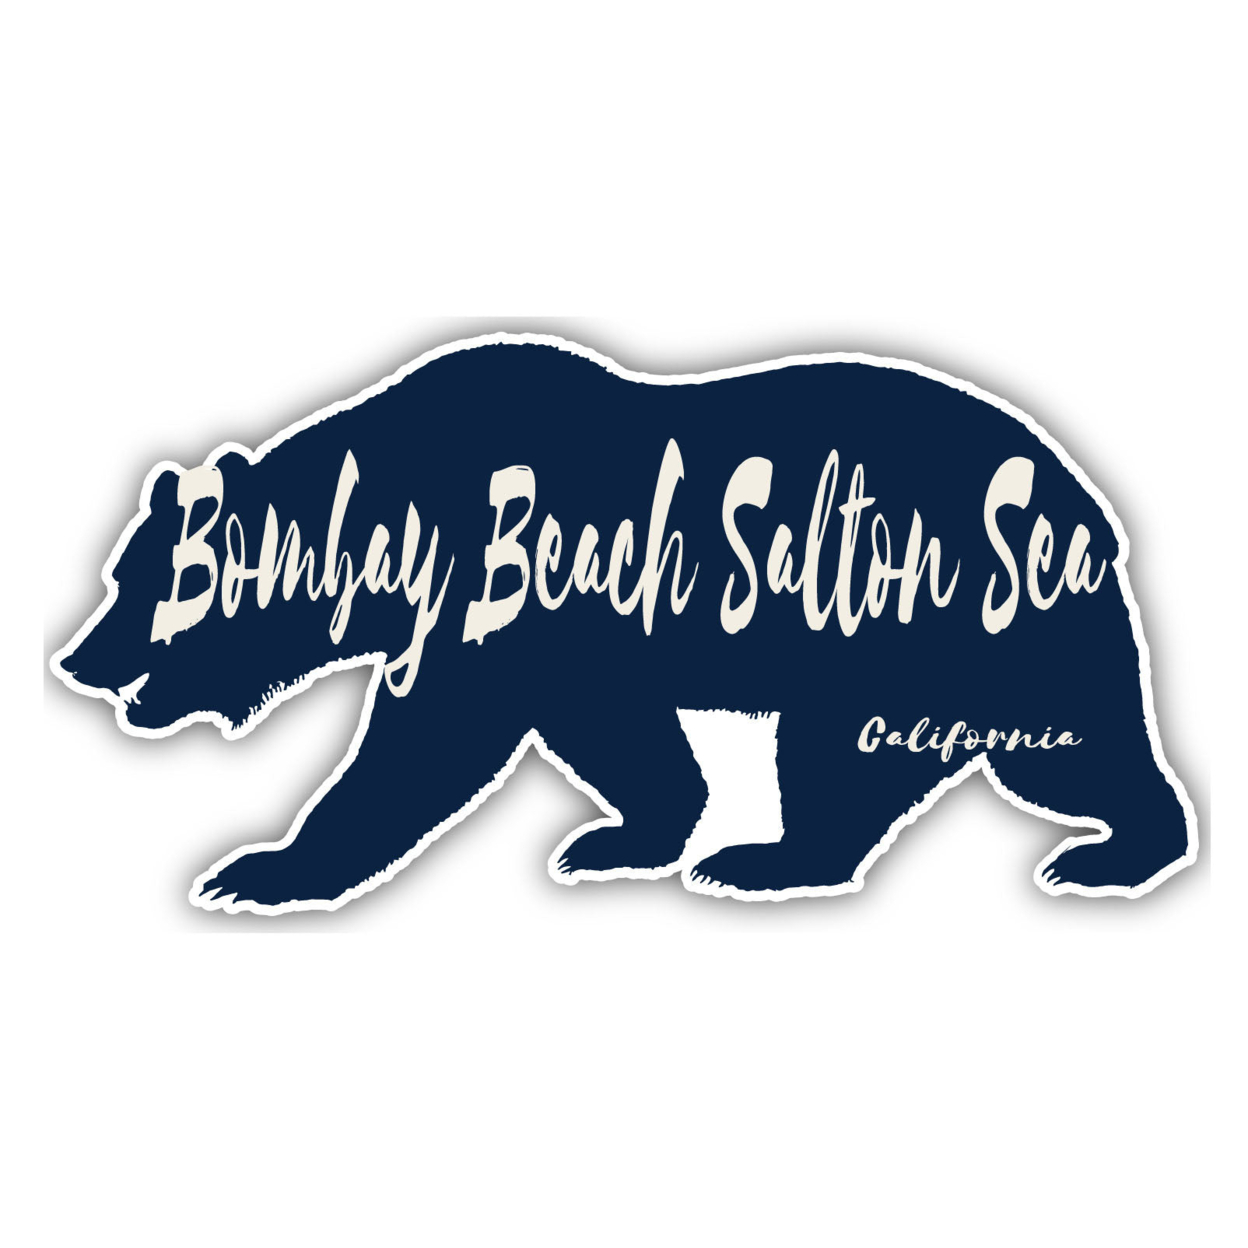 Bombay Beach Salton Sea California Souvenir Decorative Stickers (Choose Theme And Size) - Single Unit, 4-Inch, Bear